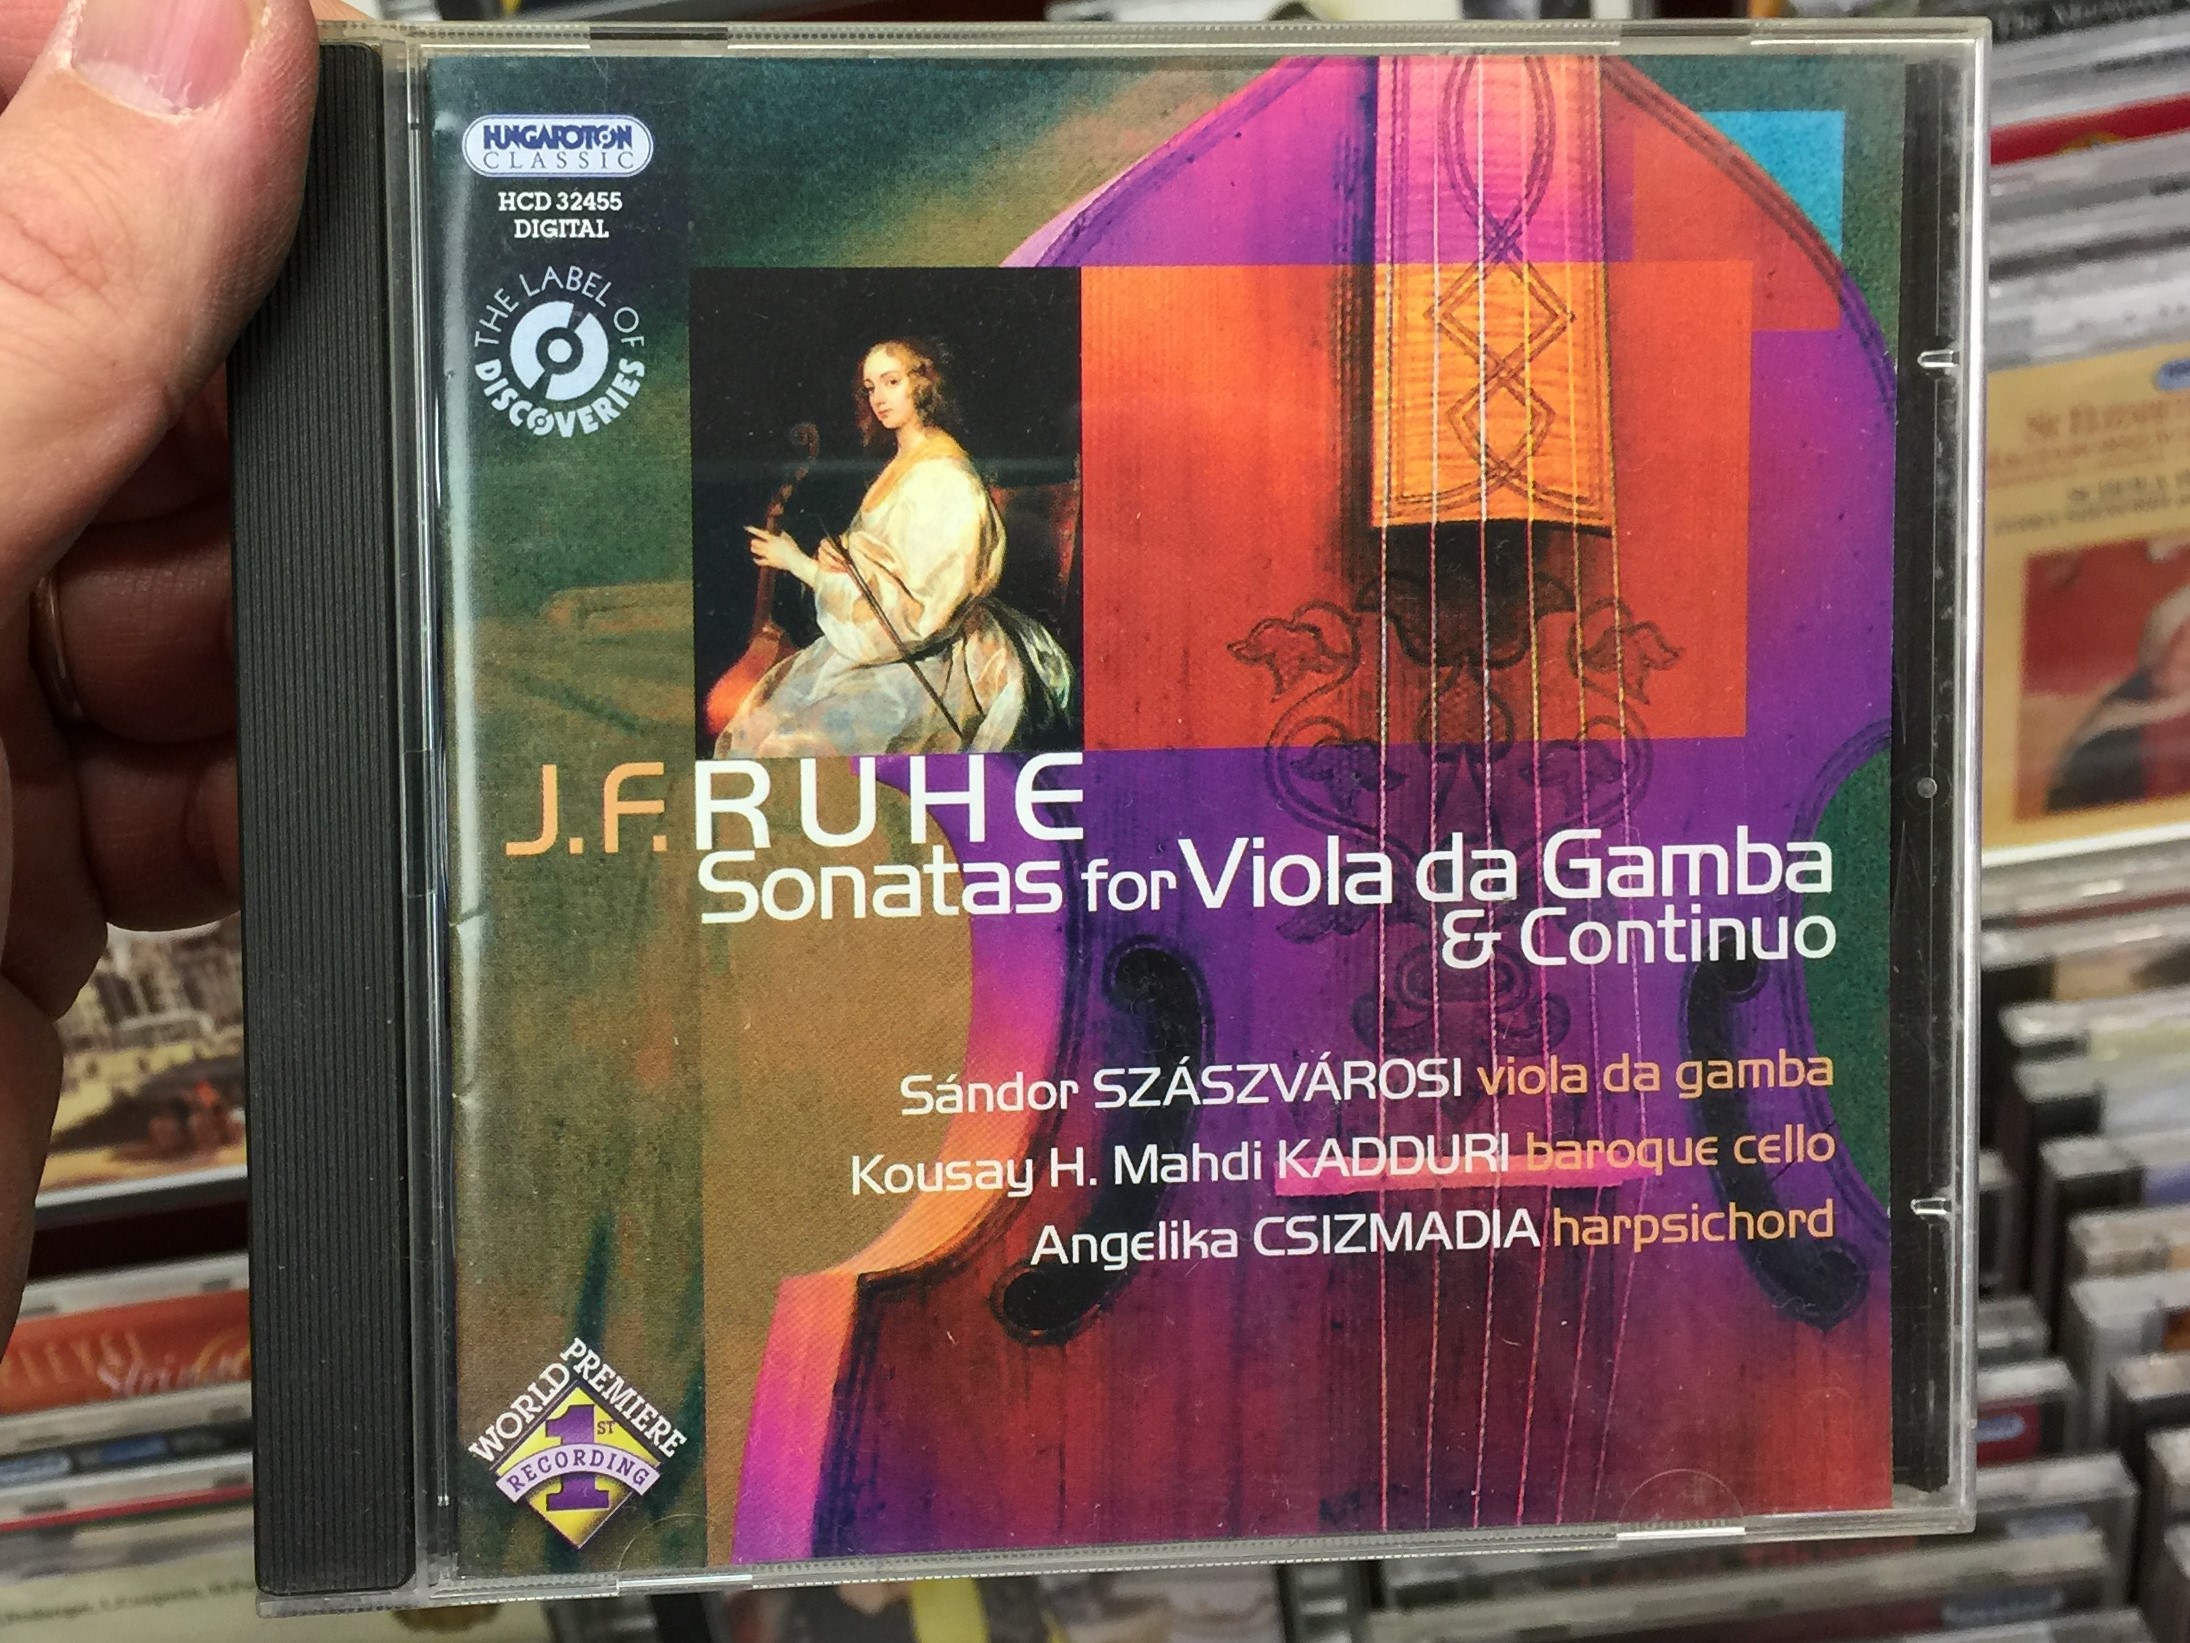 j.-f.-ruhe-sonatas-for-viola-da-gamba-continuo-sandor-szaszvarosi-viola-da-gamba-kousay-h.-mahdi-kadduri-baroque-cello-angelika-csizmadia-harpsichord-hungaroton-classic-audio-cd-2007-1-.jpg